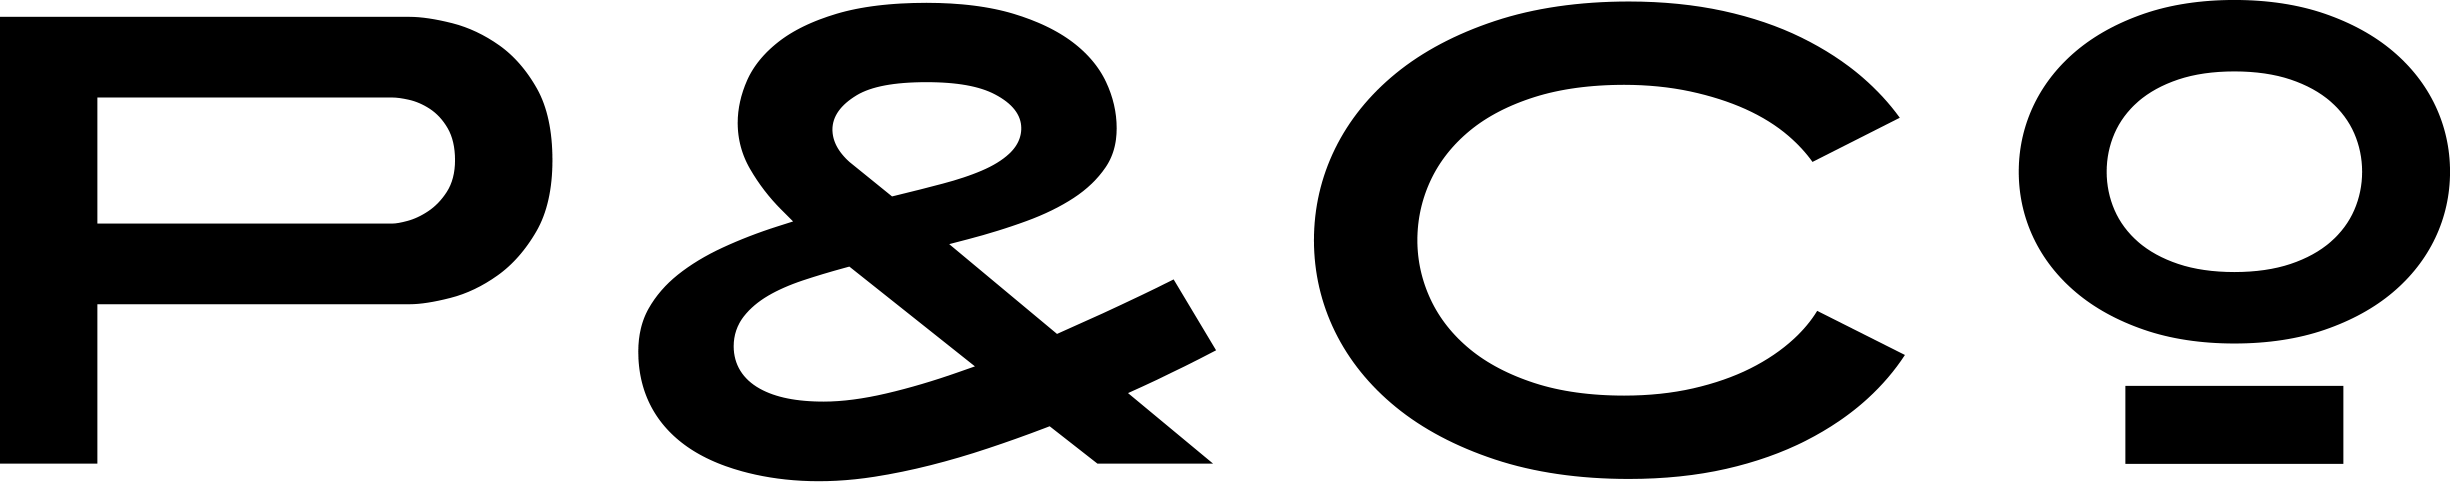 pandco logo